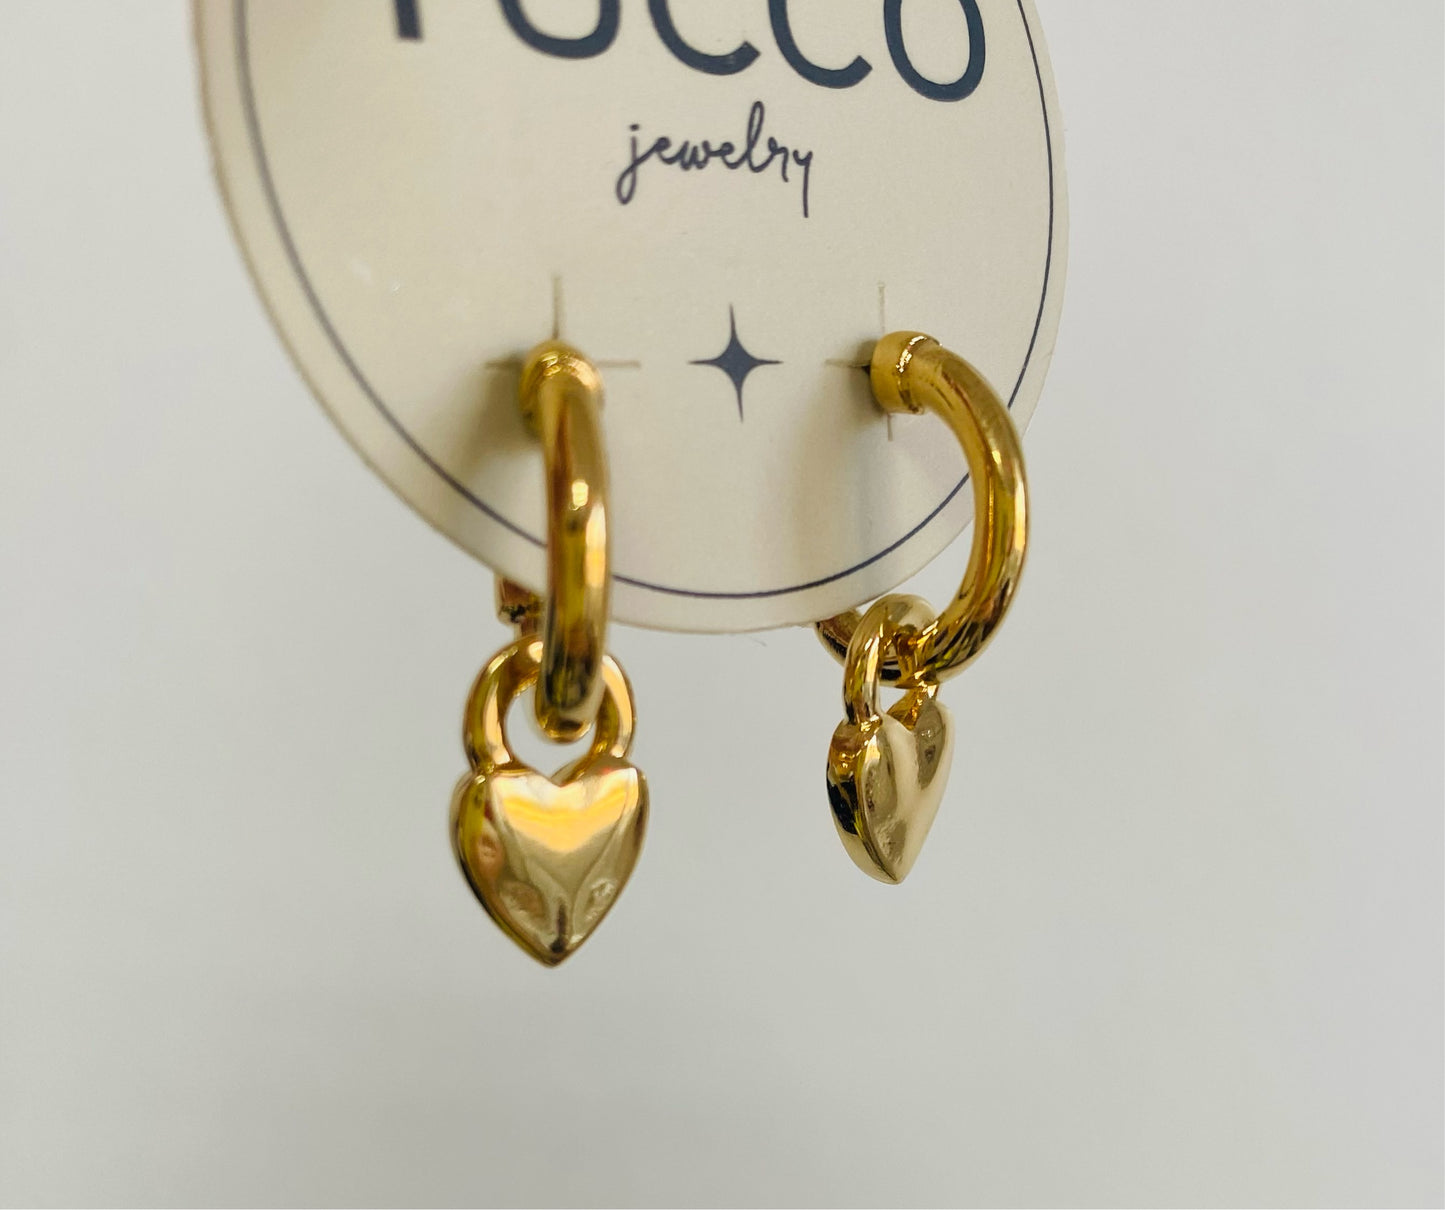 Tucco Heart Charm Earrings